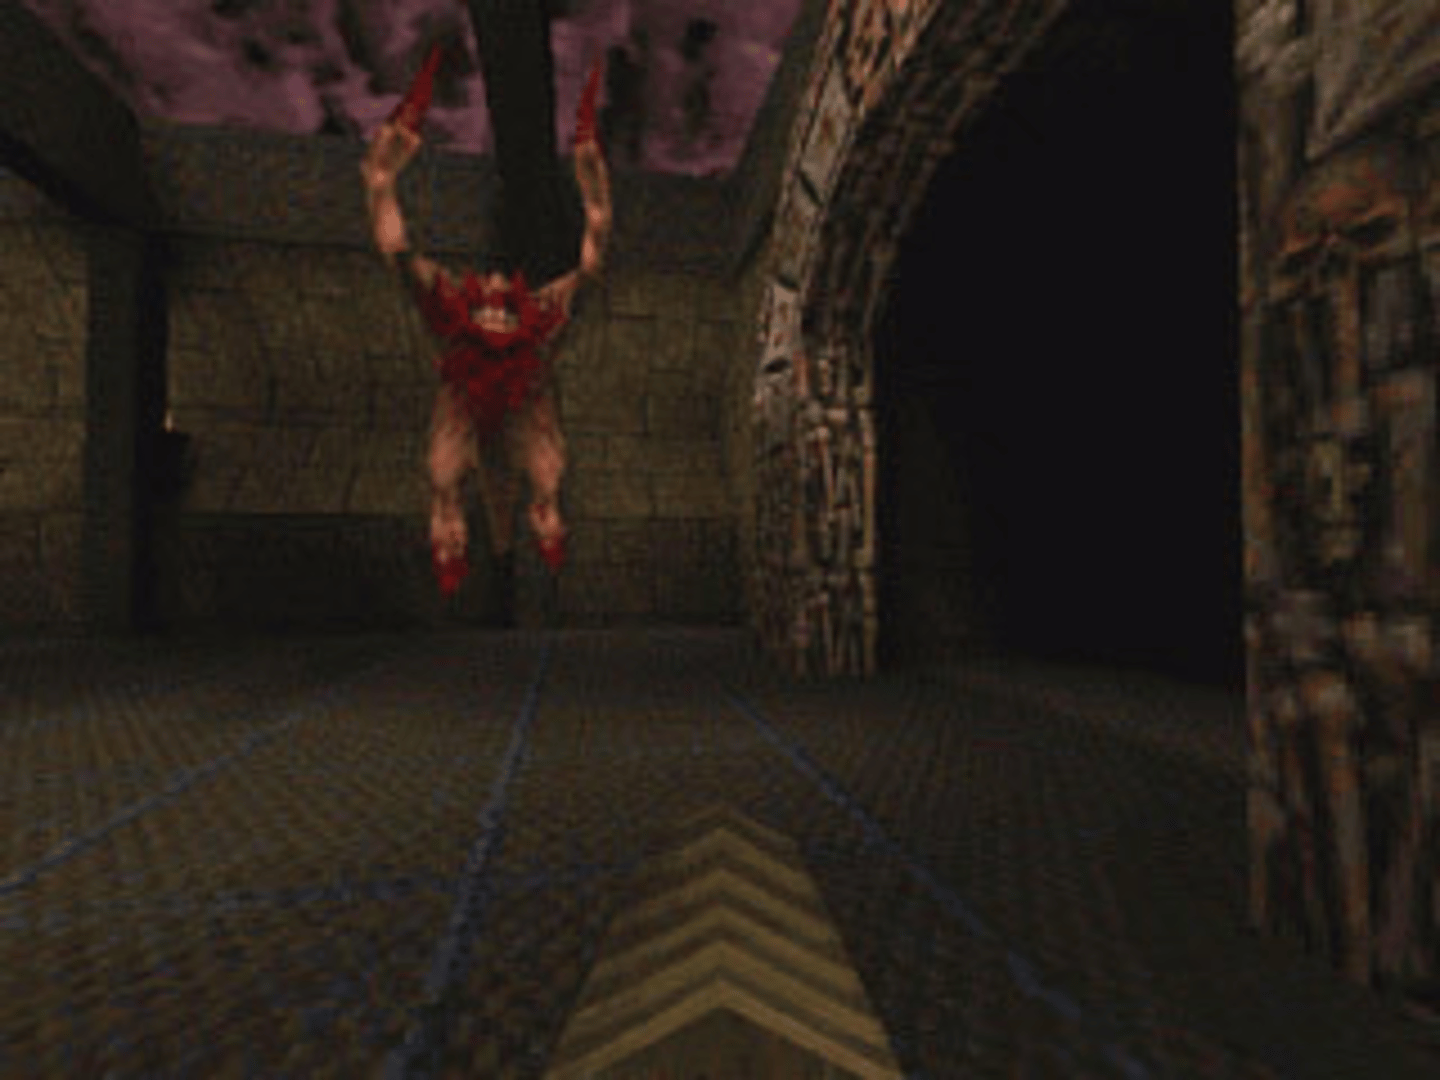 Quake screenshot